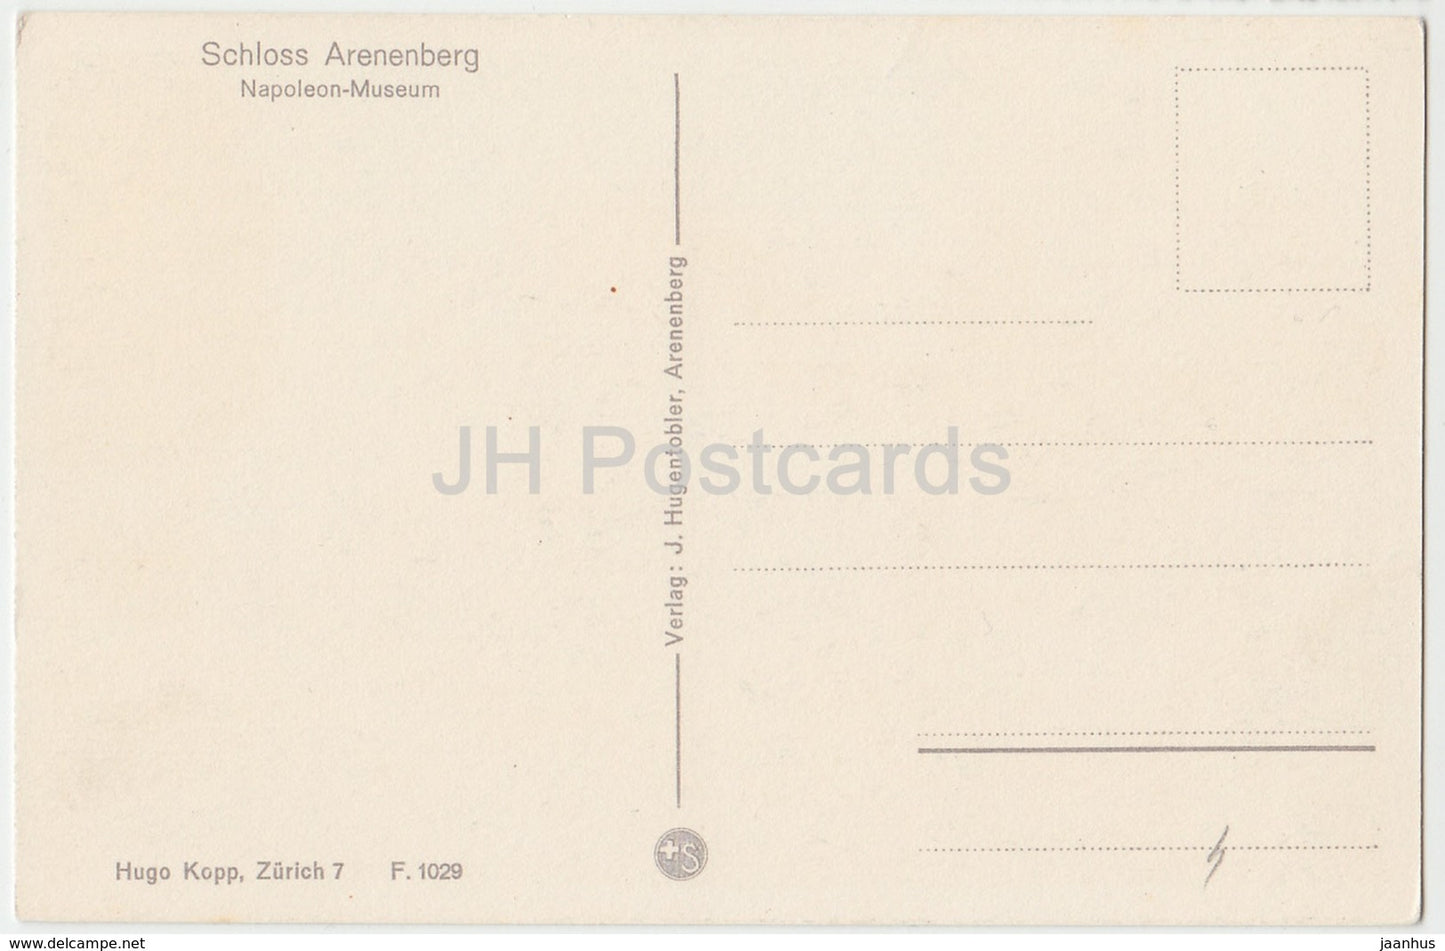 Schloss Arenenberg - Napoleon-Museum - Schloss - Museum - Schweiz - alte Postkarte - unbenutzt